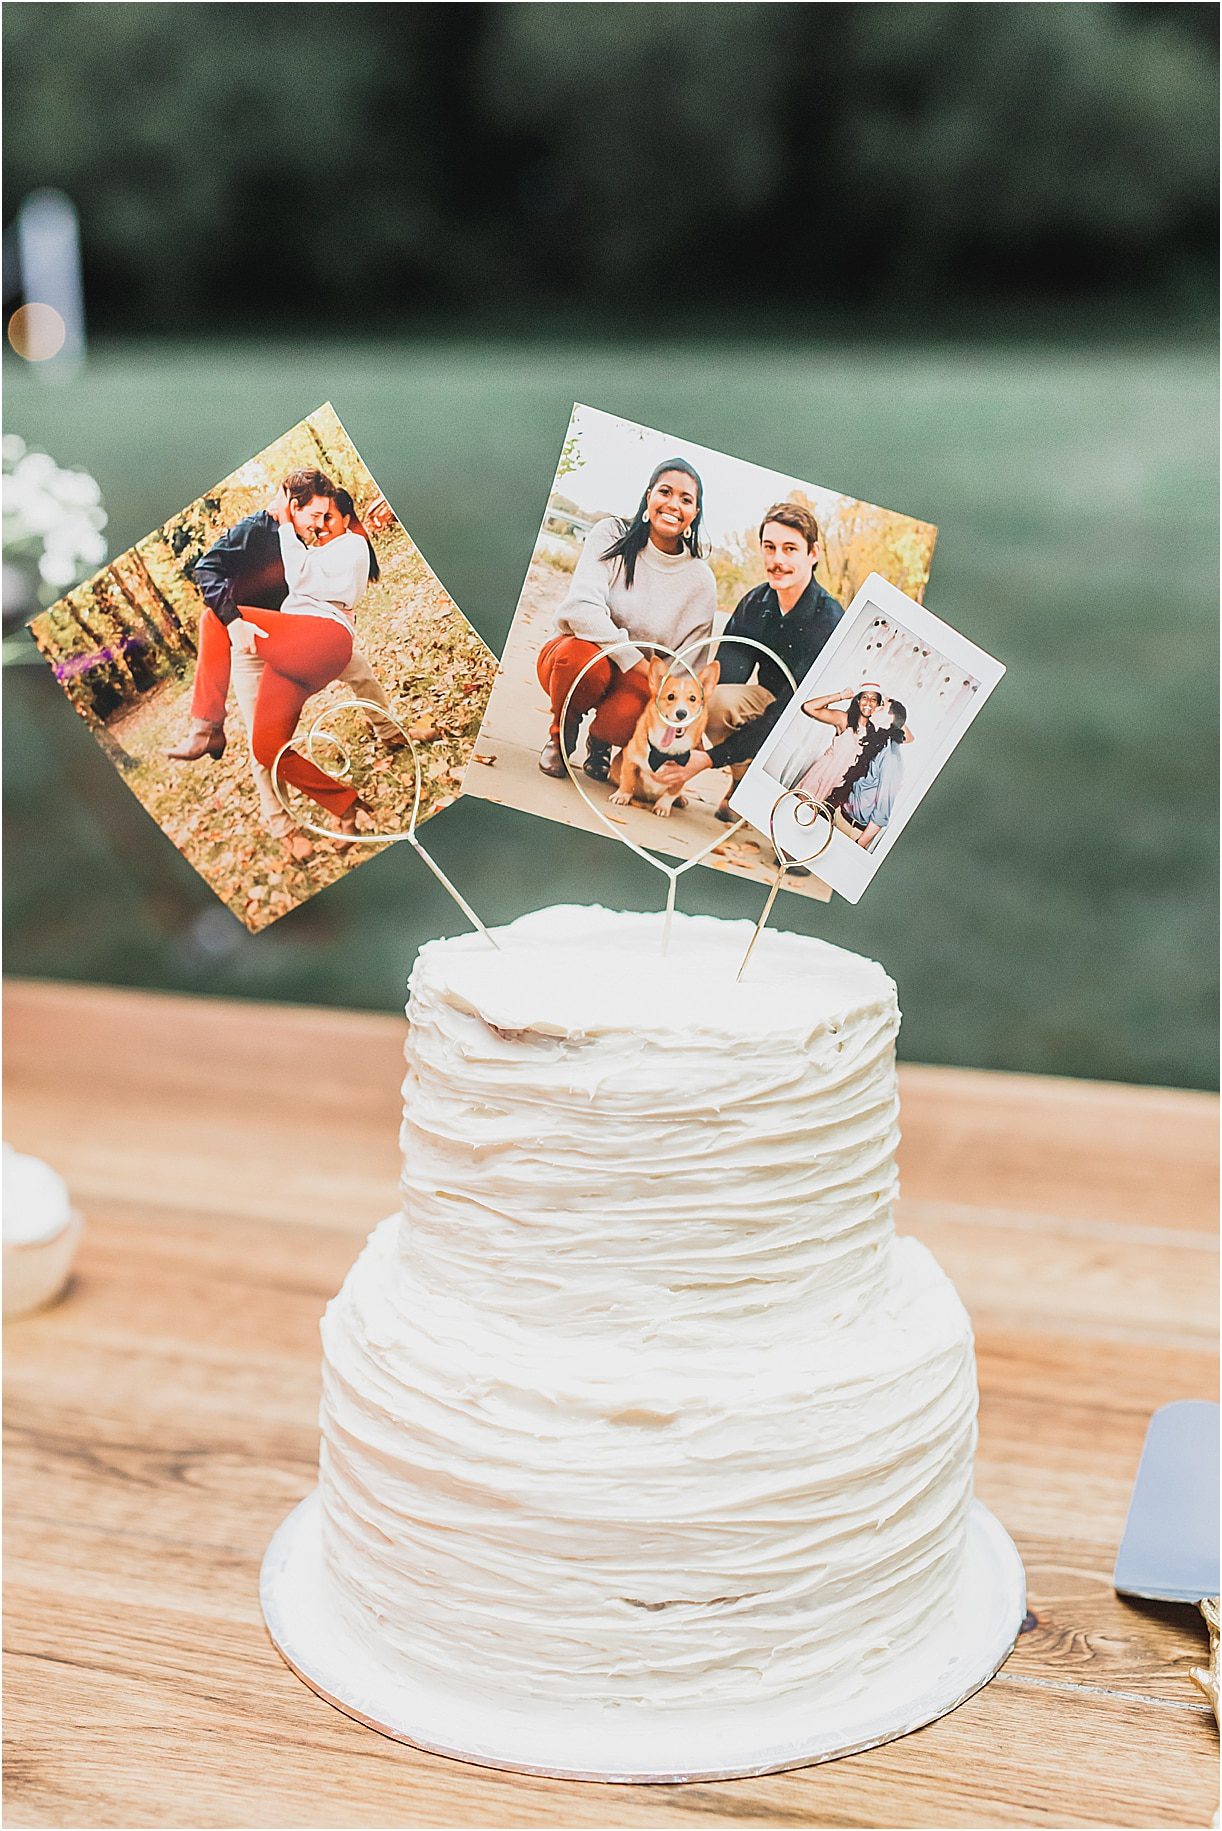 Wedding Cake with Photos on Top